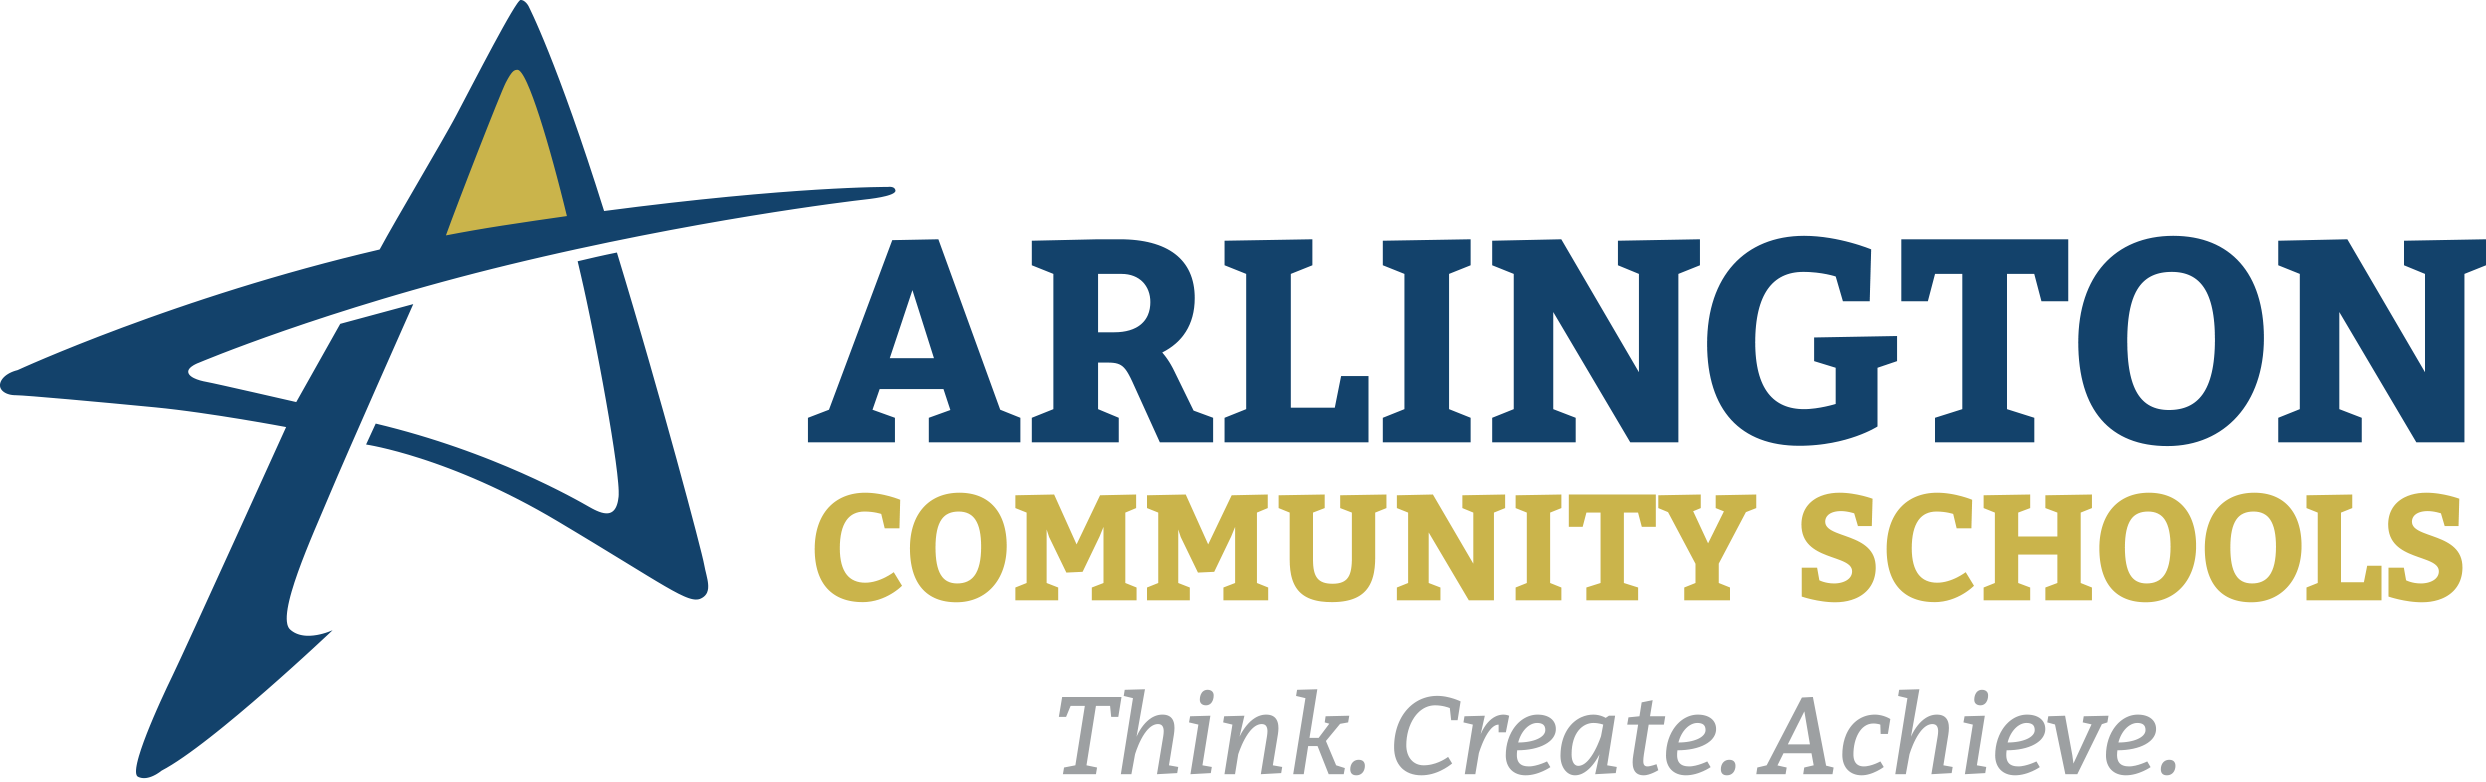 Arlington Community Schools logo